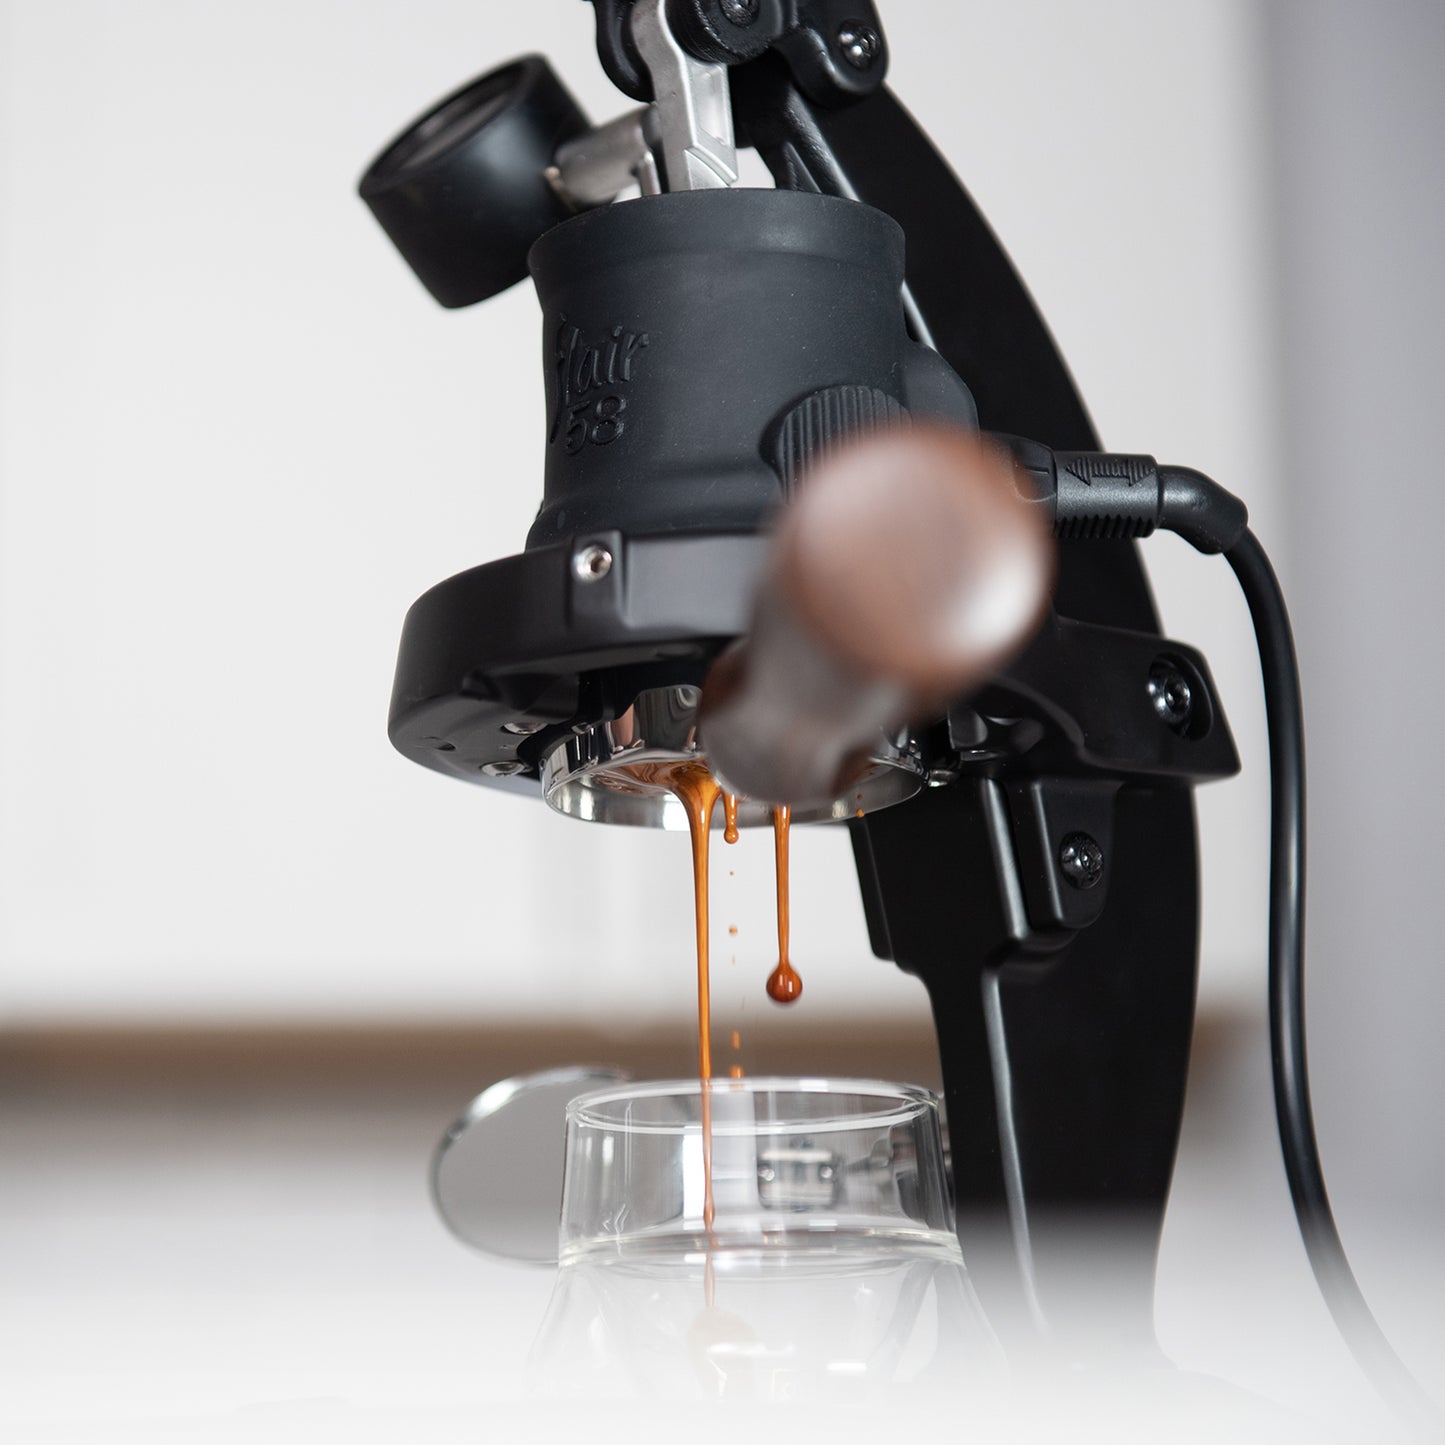 Flair Espresso Flair 58 Plus - Pre Order - Coffee Coaching Club